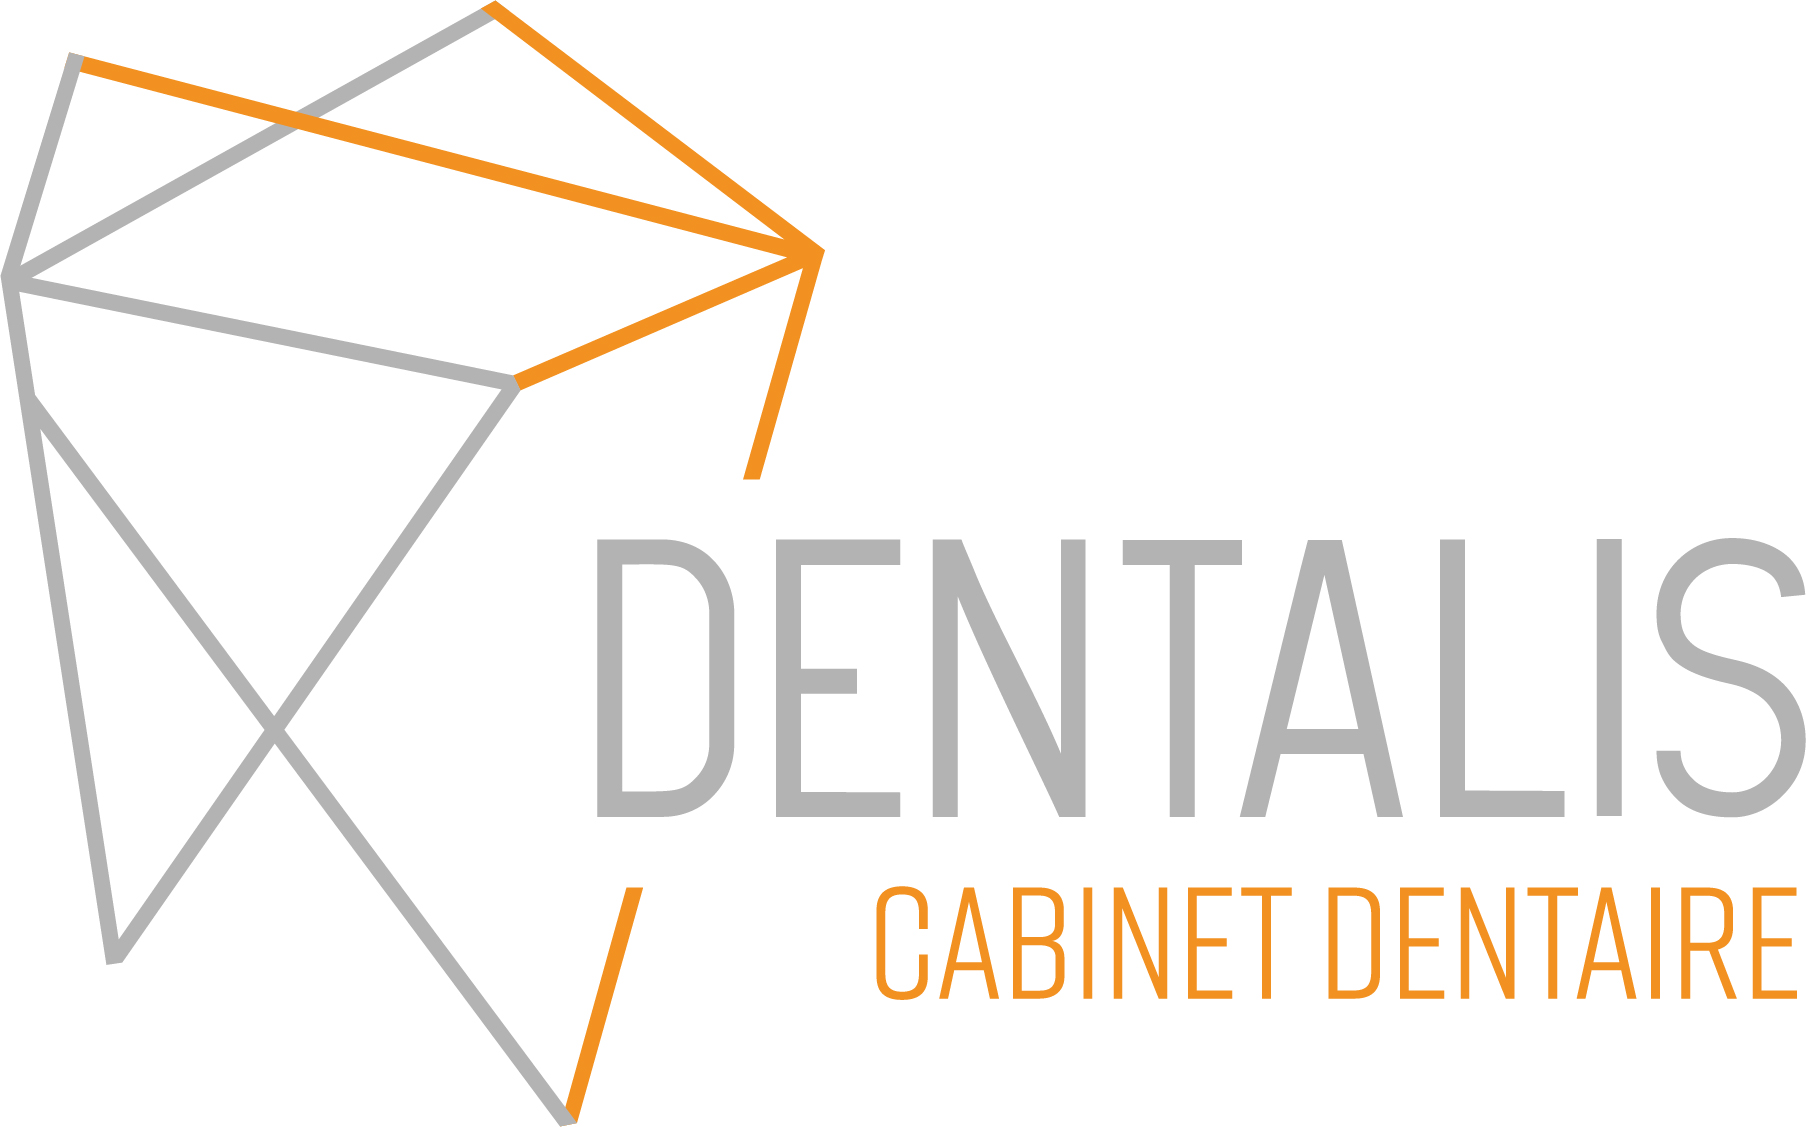 Cabinet dentaire Dentalis Ixelles